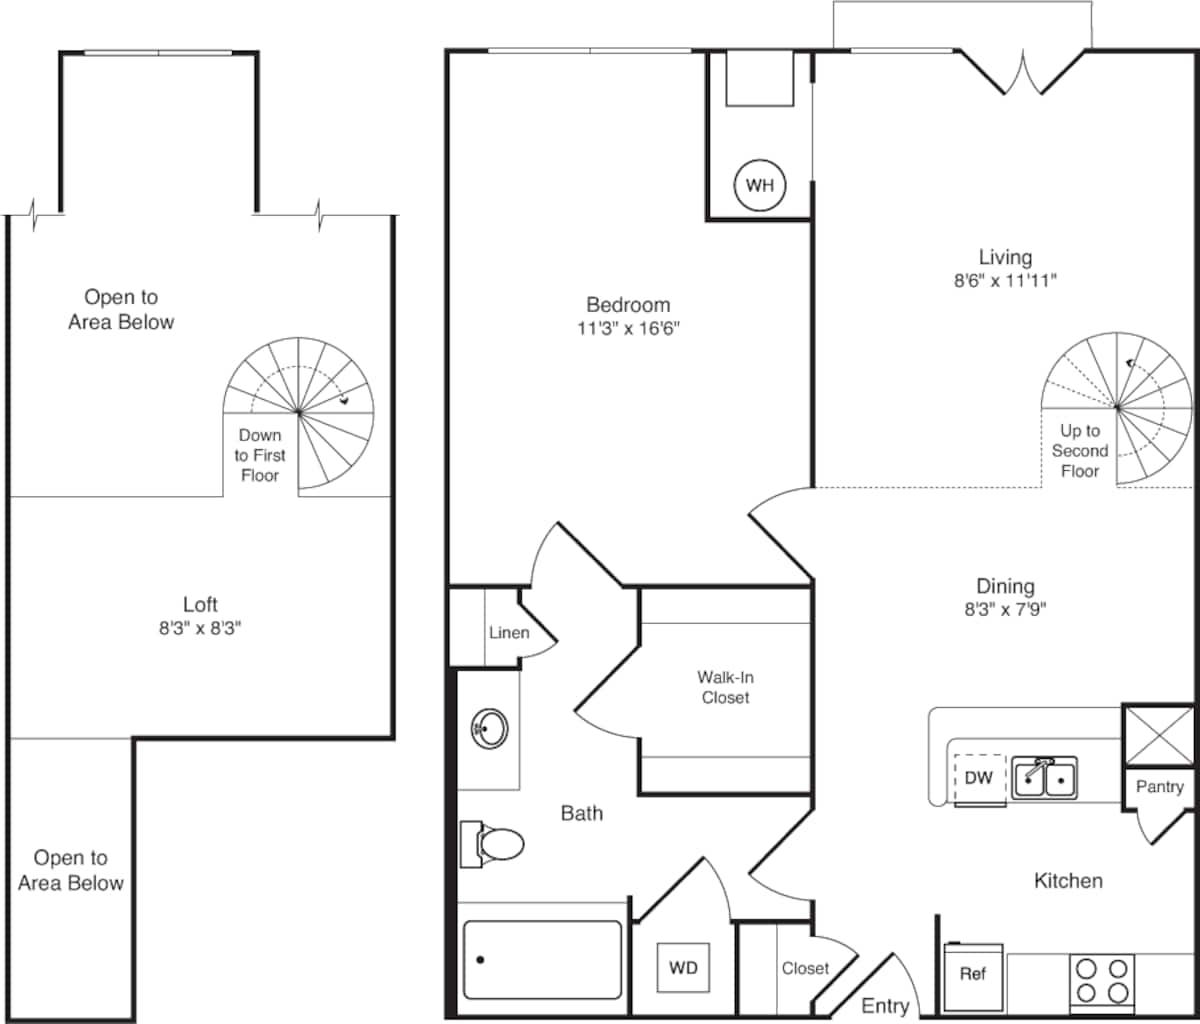 Floorplan diagram for Allegheny with loft, showing 1 bedroom